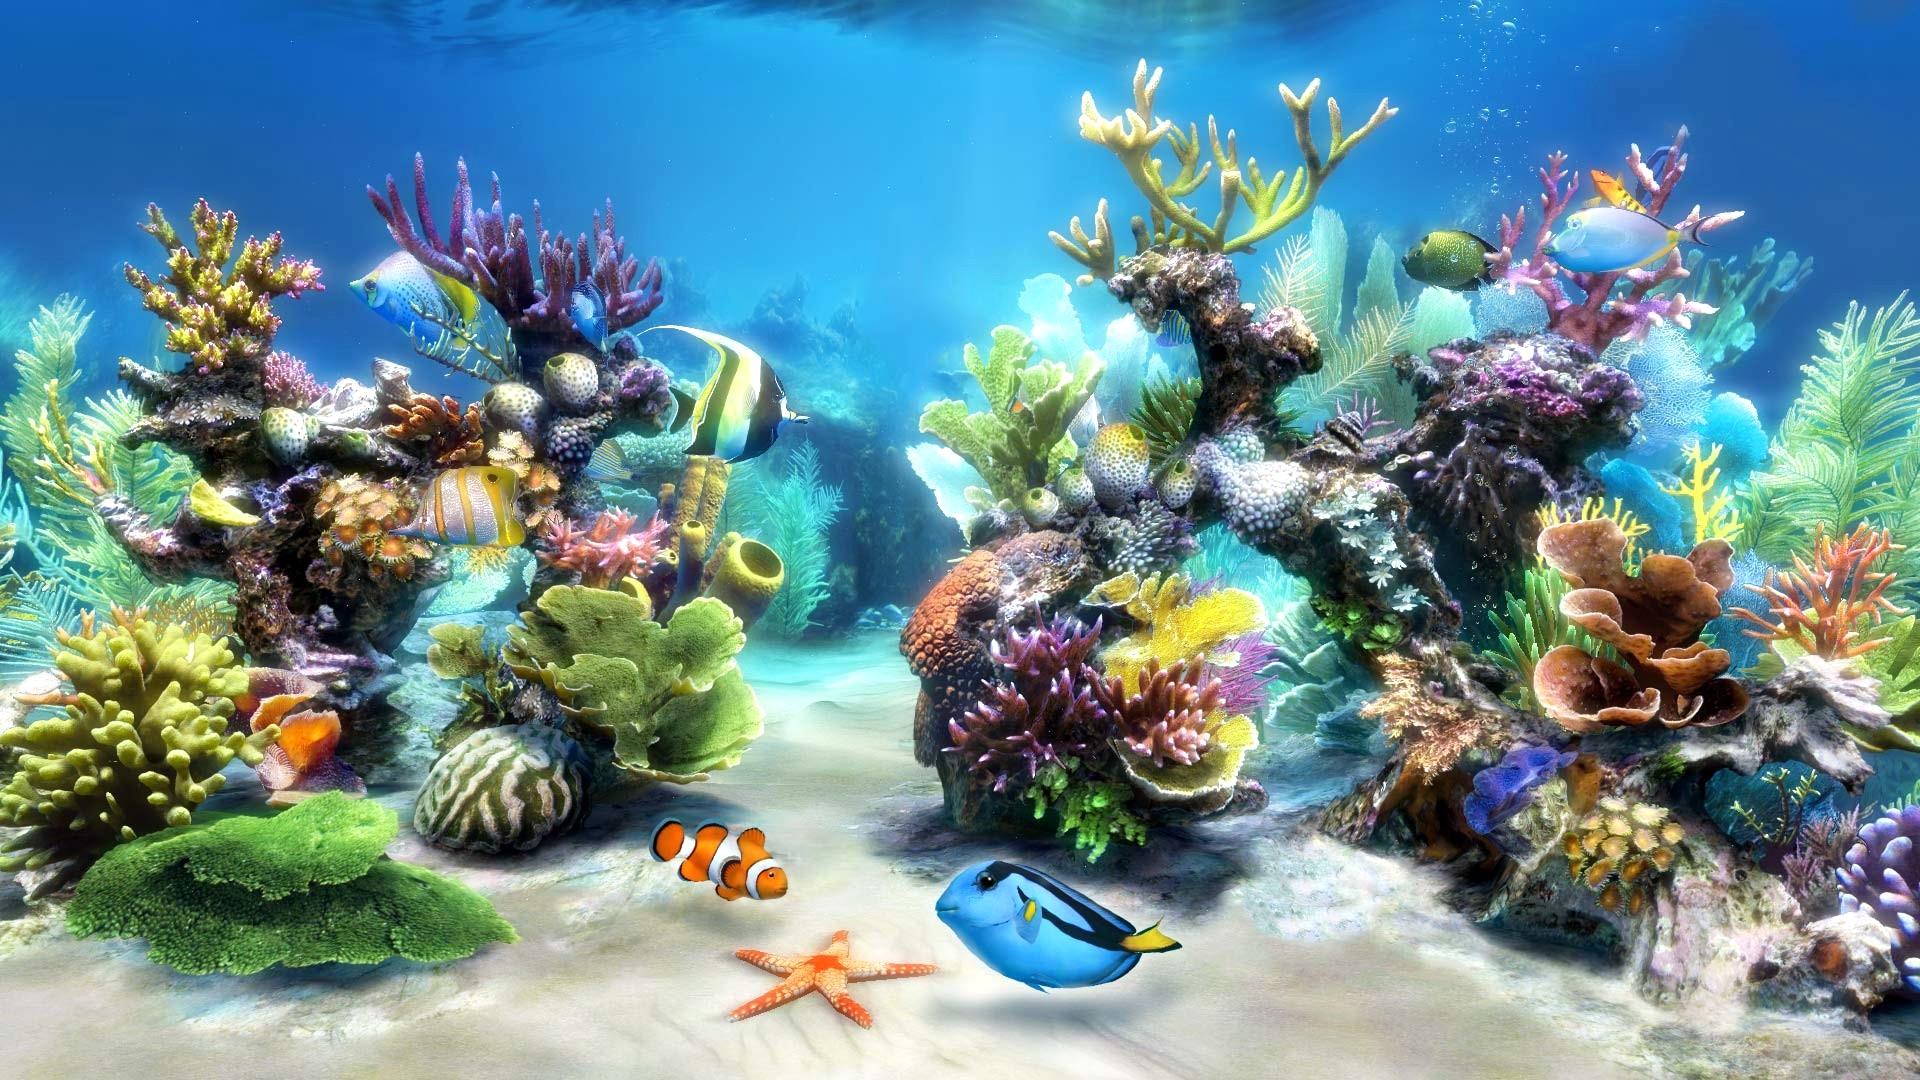 live wallpaper hd,marine biology,reef,coral reef,coral reef fish,natural environment